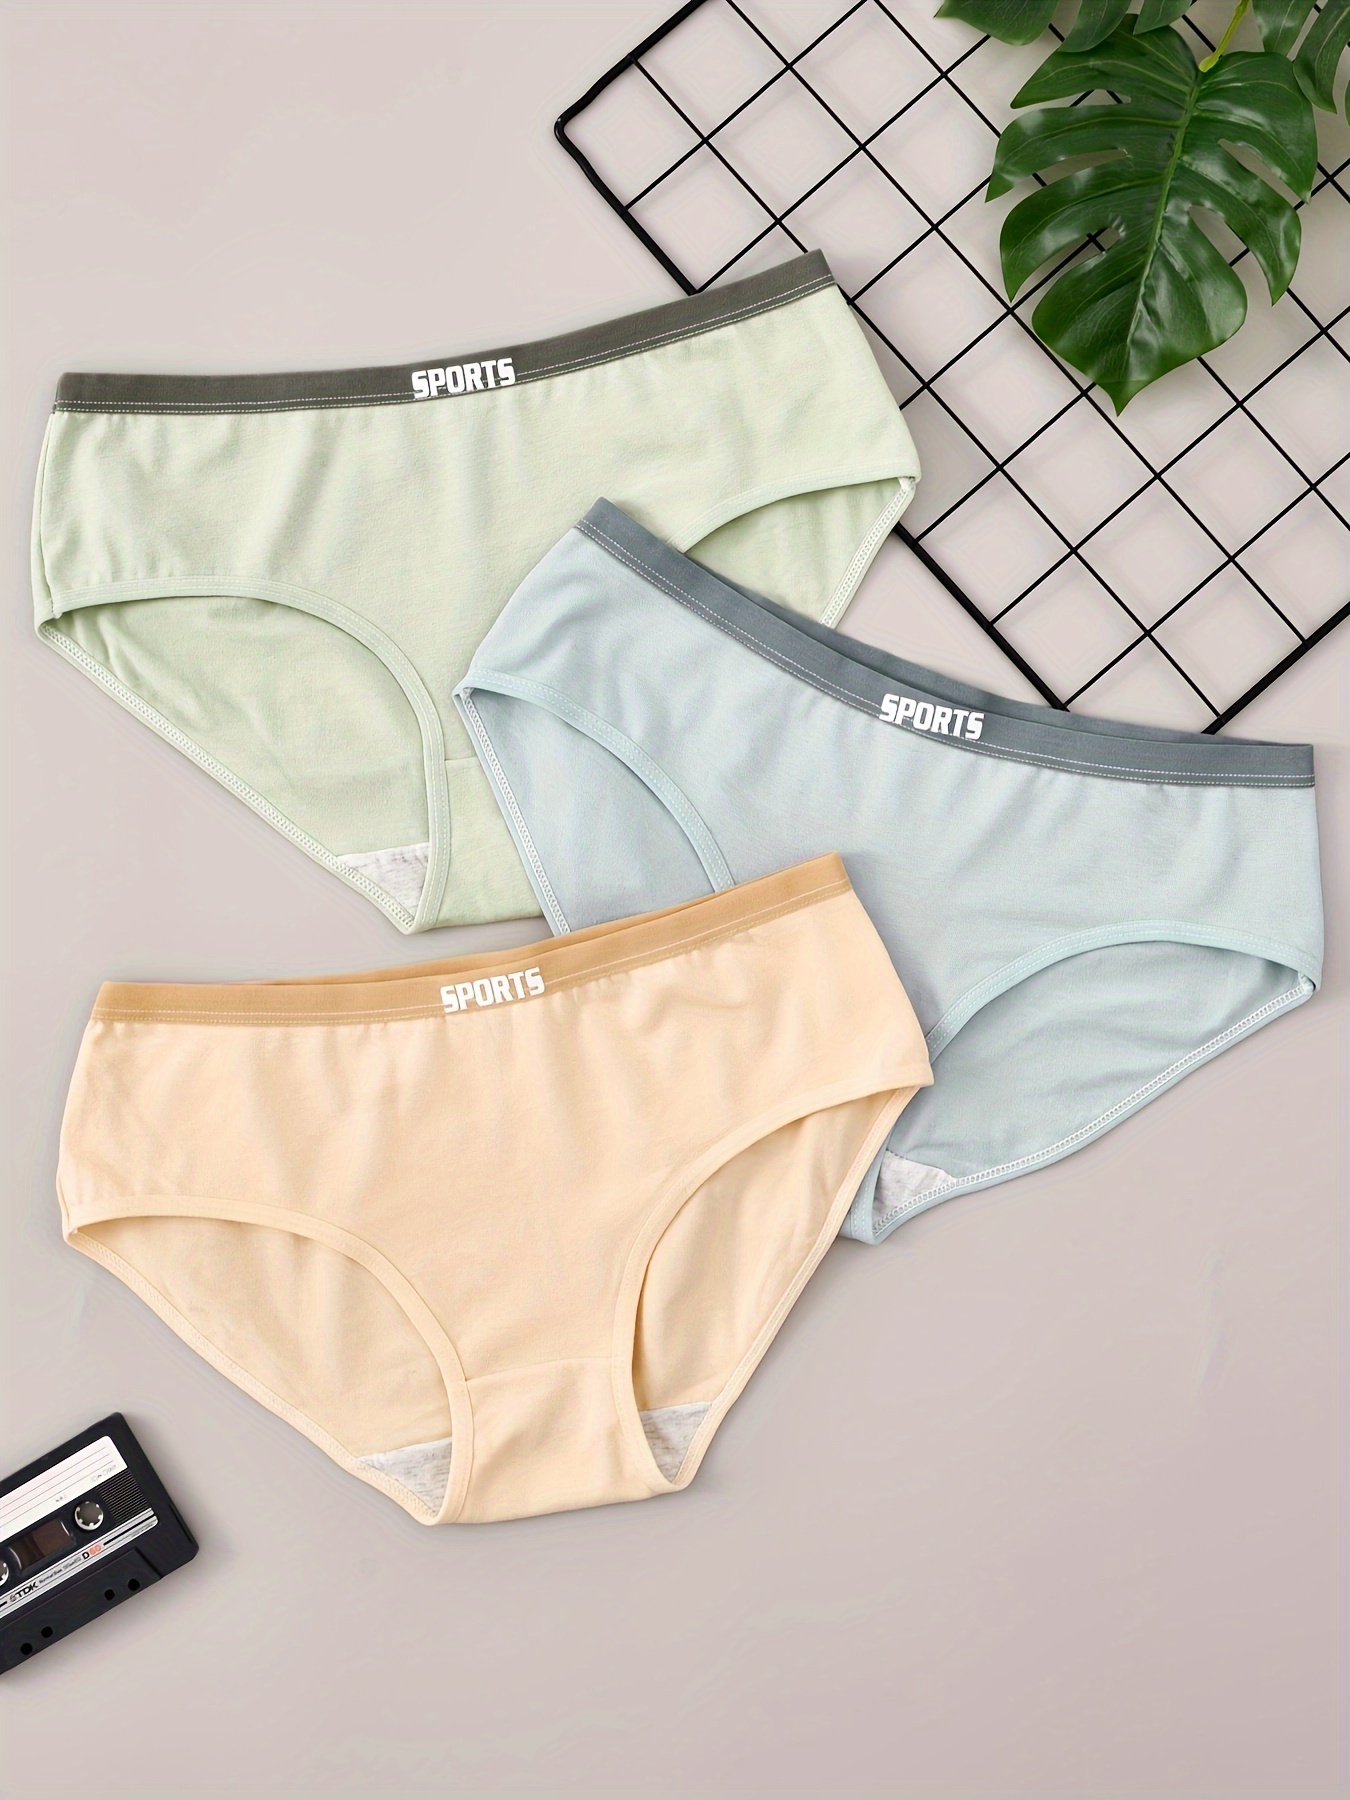 Sexy Dot Print Briefs, Soft & Comfy Contrast Lace Intimates Panties,  Women's Lingerie & Underwear